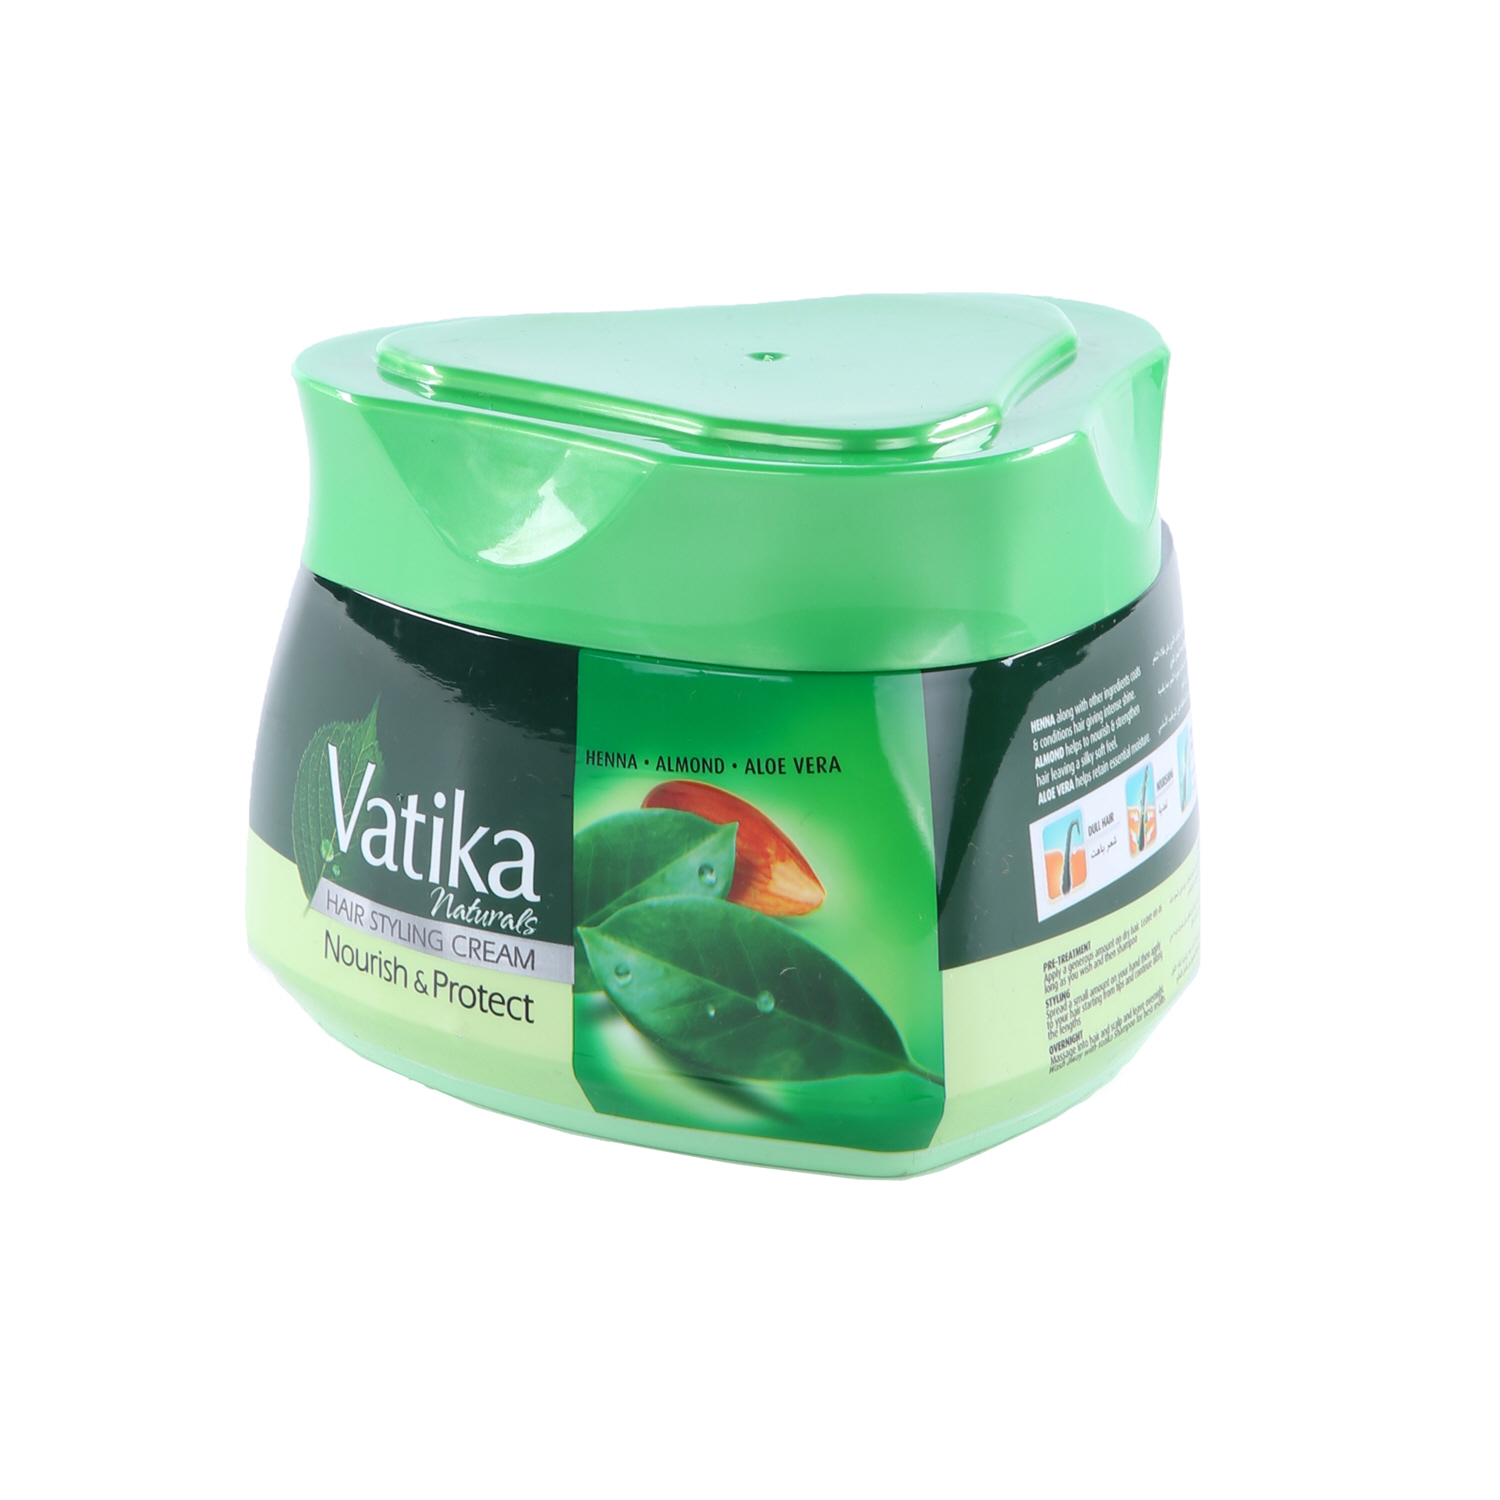 Dabur Vatika Hair Styling Cream Nourish & Protect Henna Almond & Aloe vera 210ml